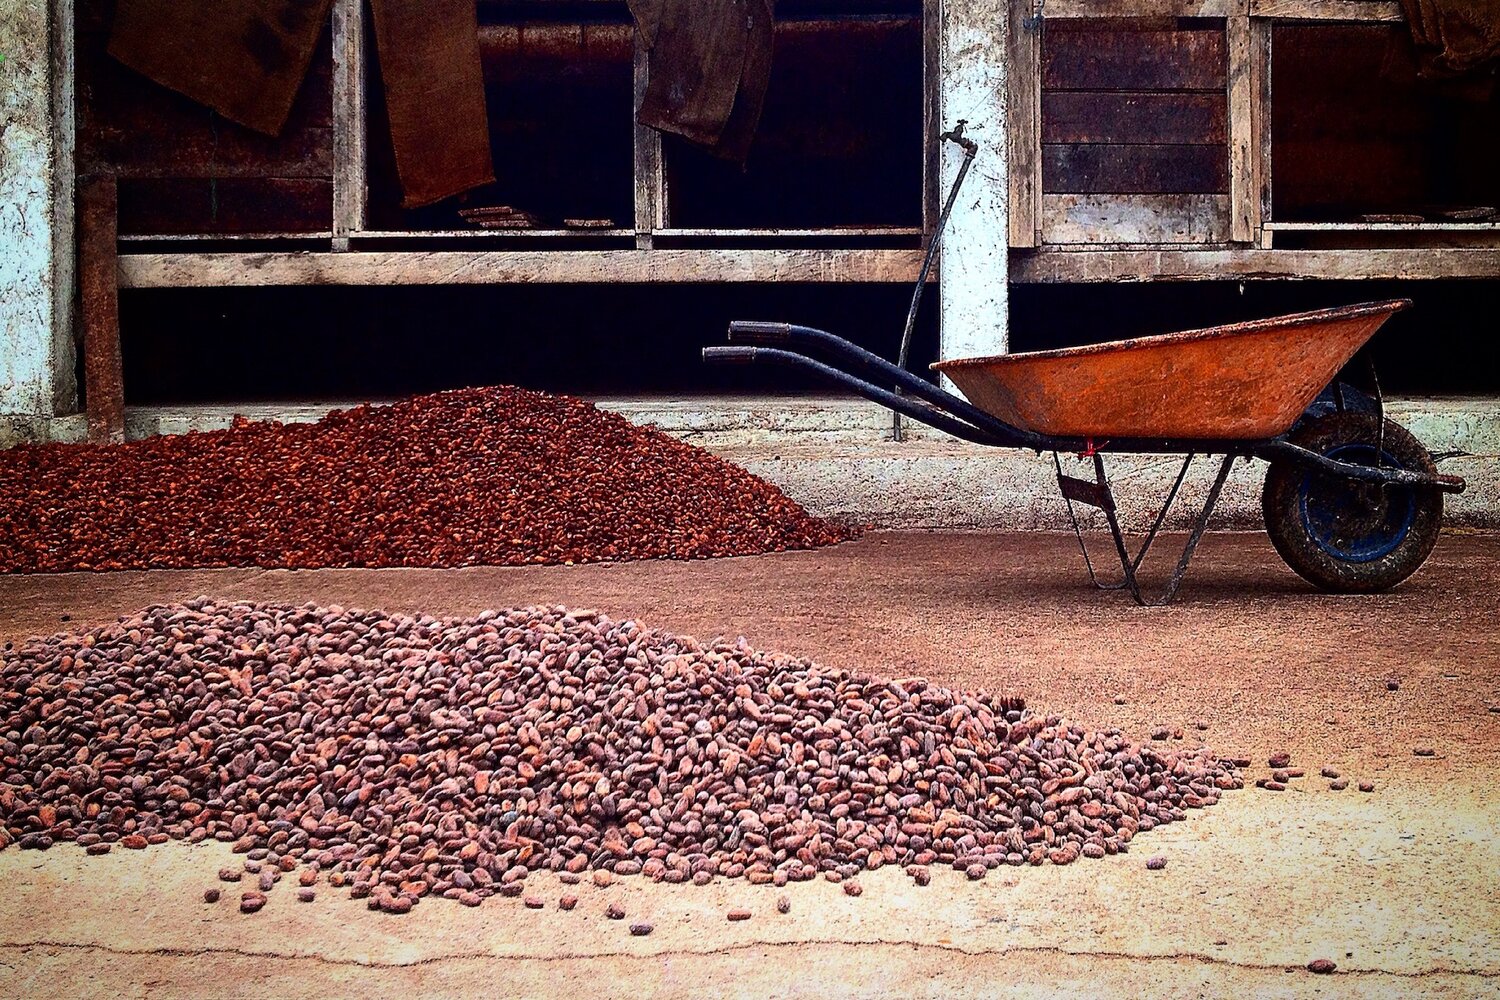 Fermenting and drying cacao, Esmeraldas, Ecuador. Photo credit: Simran Sethi